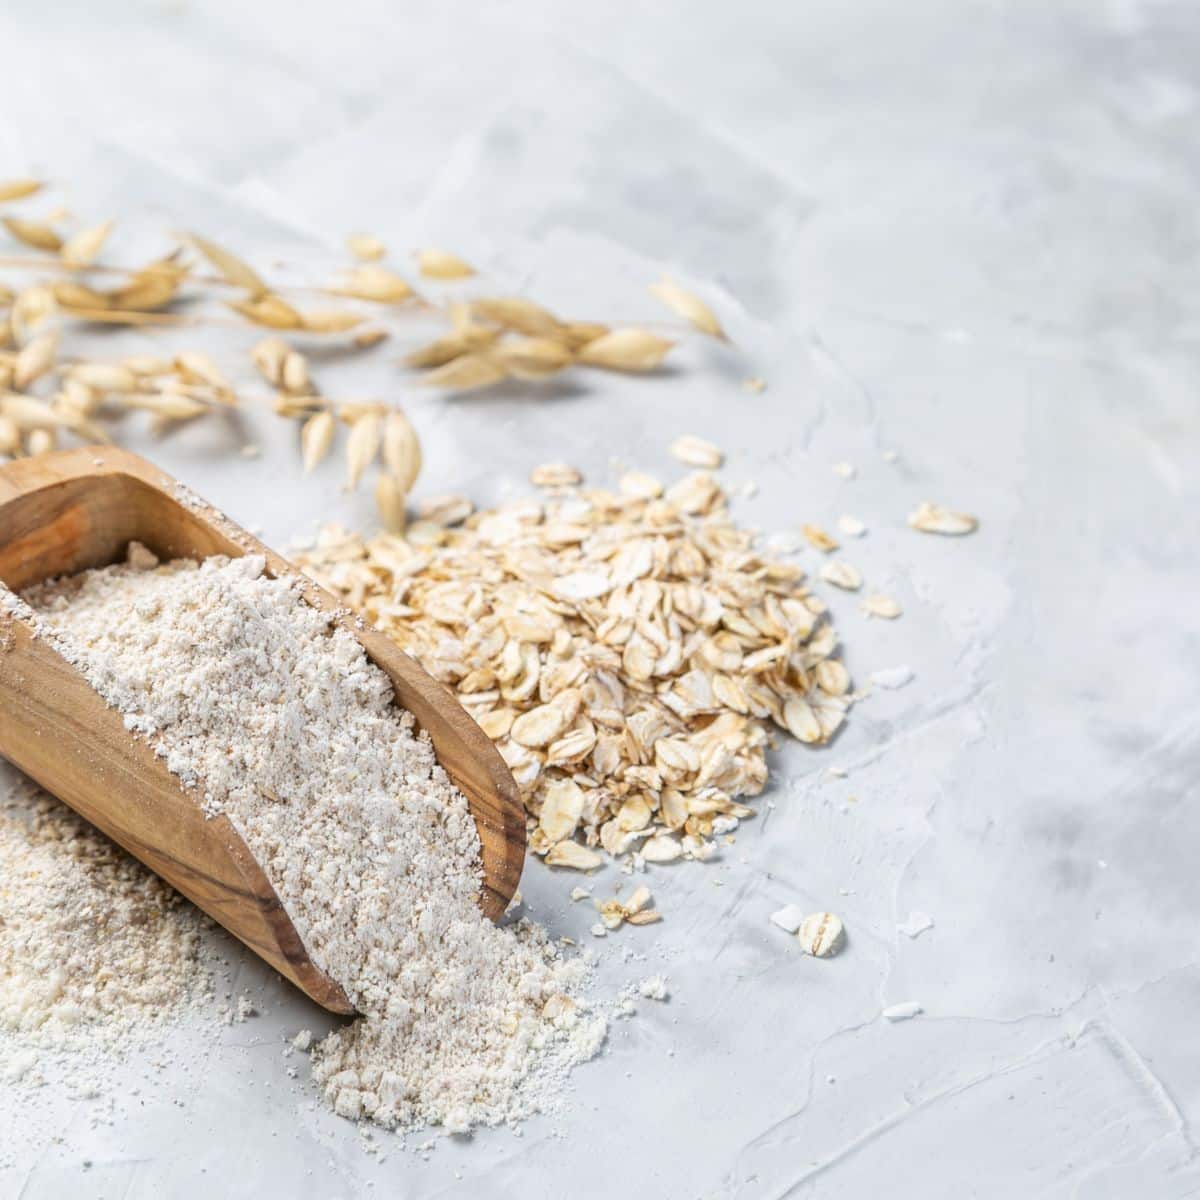 Homemade oat flour and whole grain oats